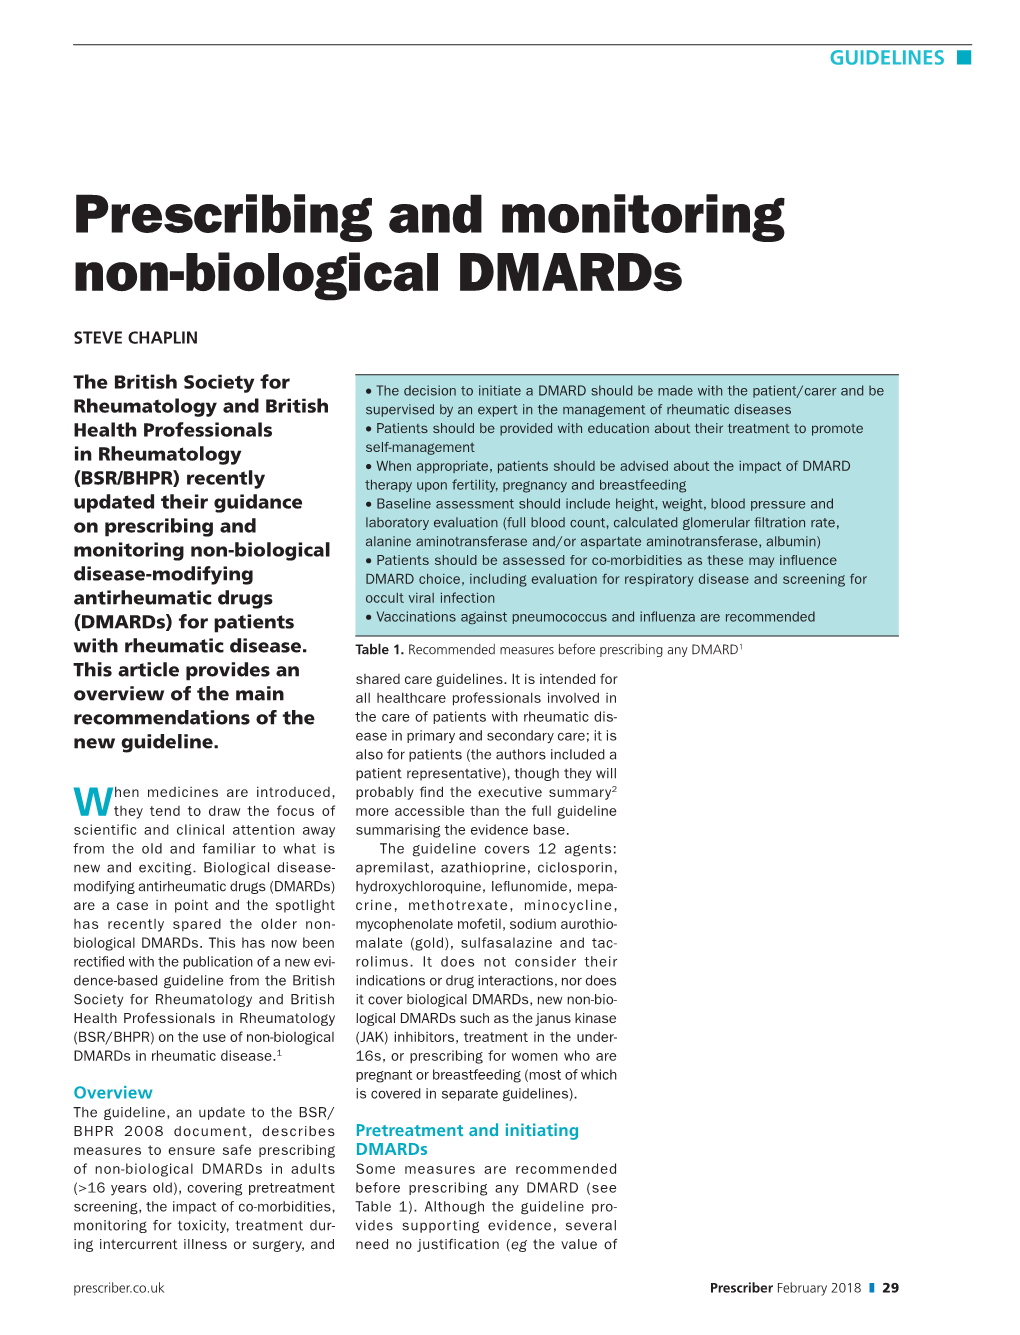 Prescribing and Monitoring Non-Biological Dmards